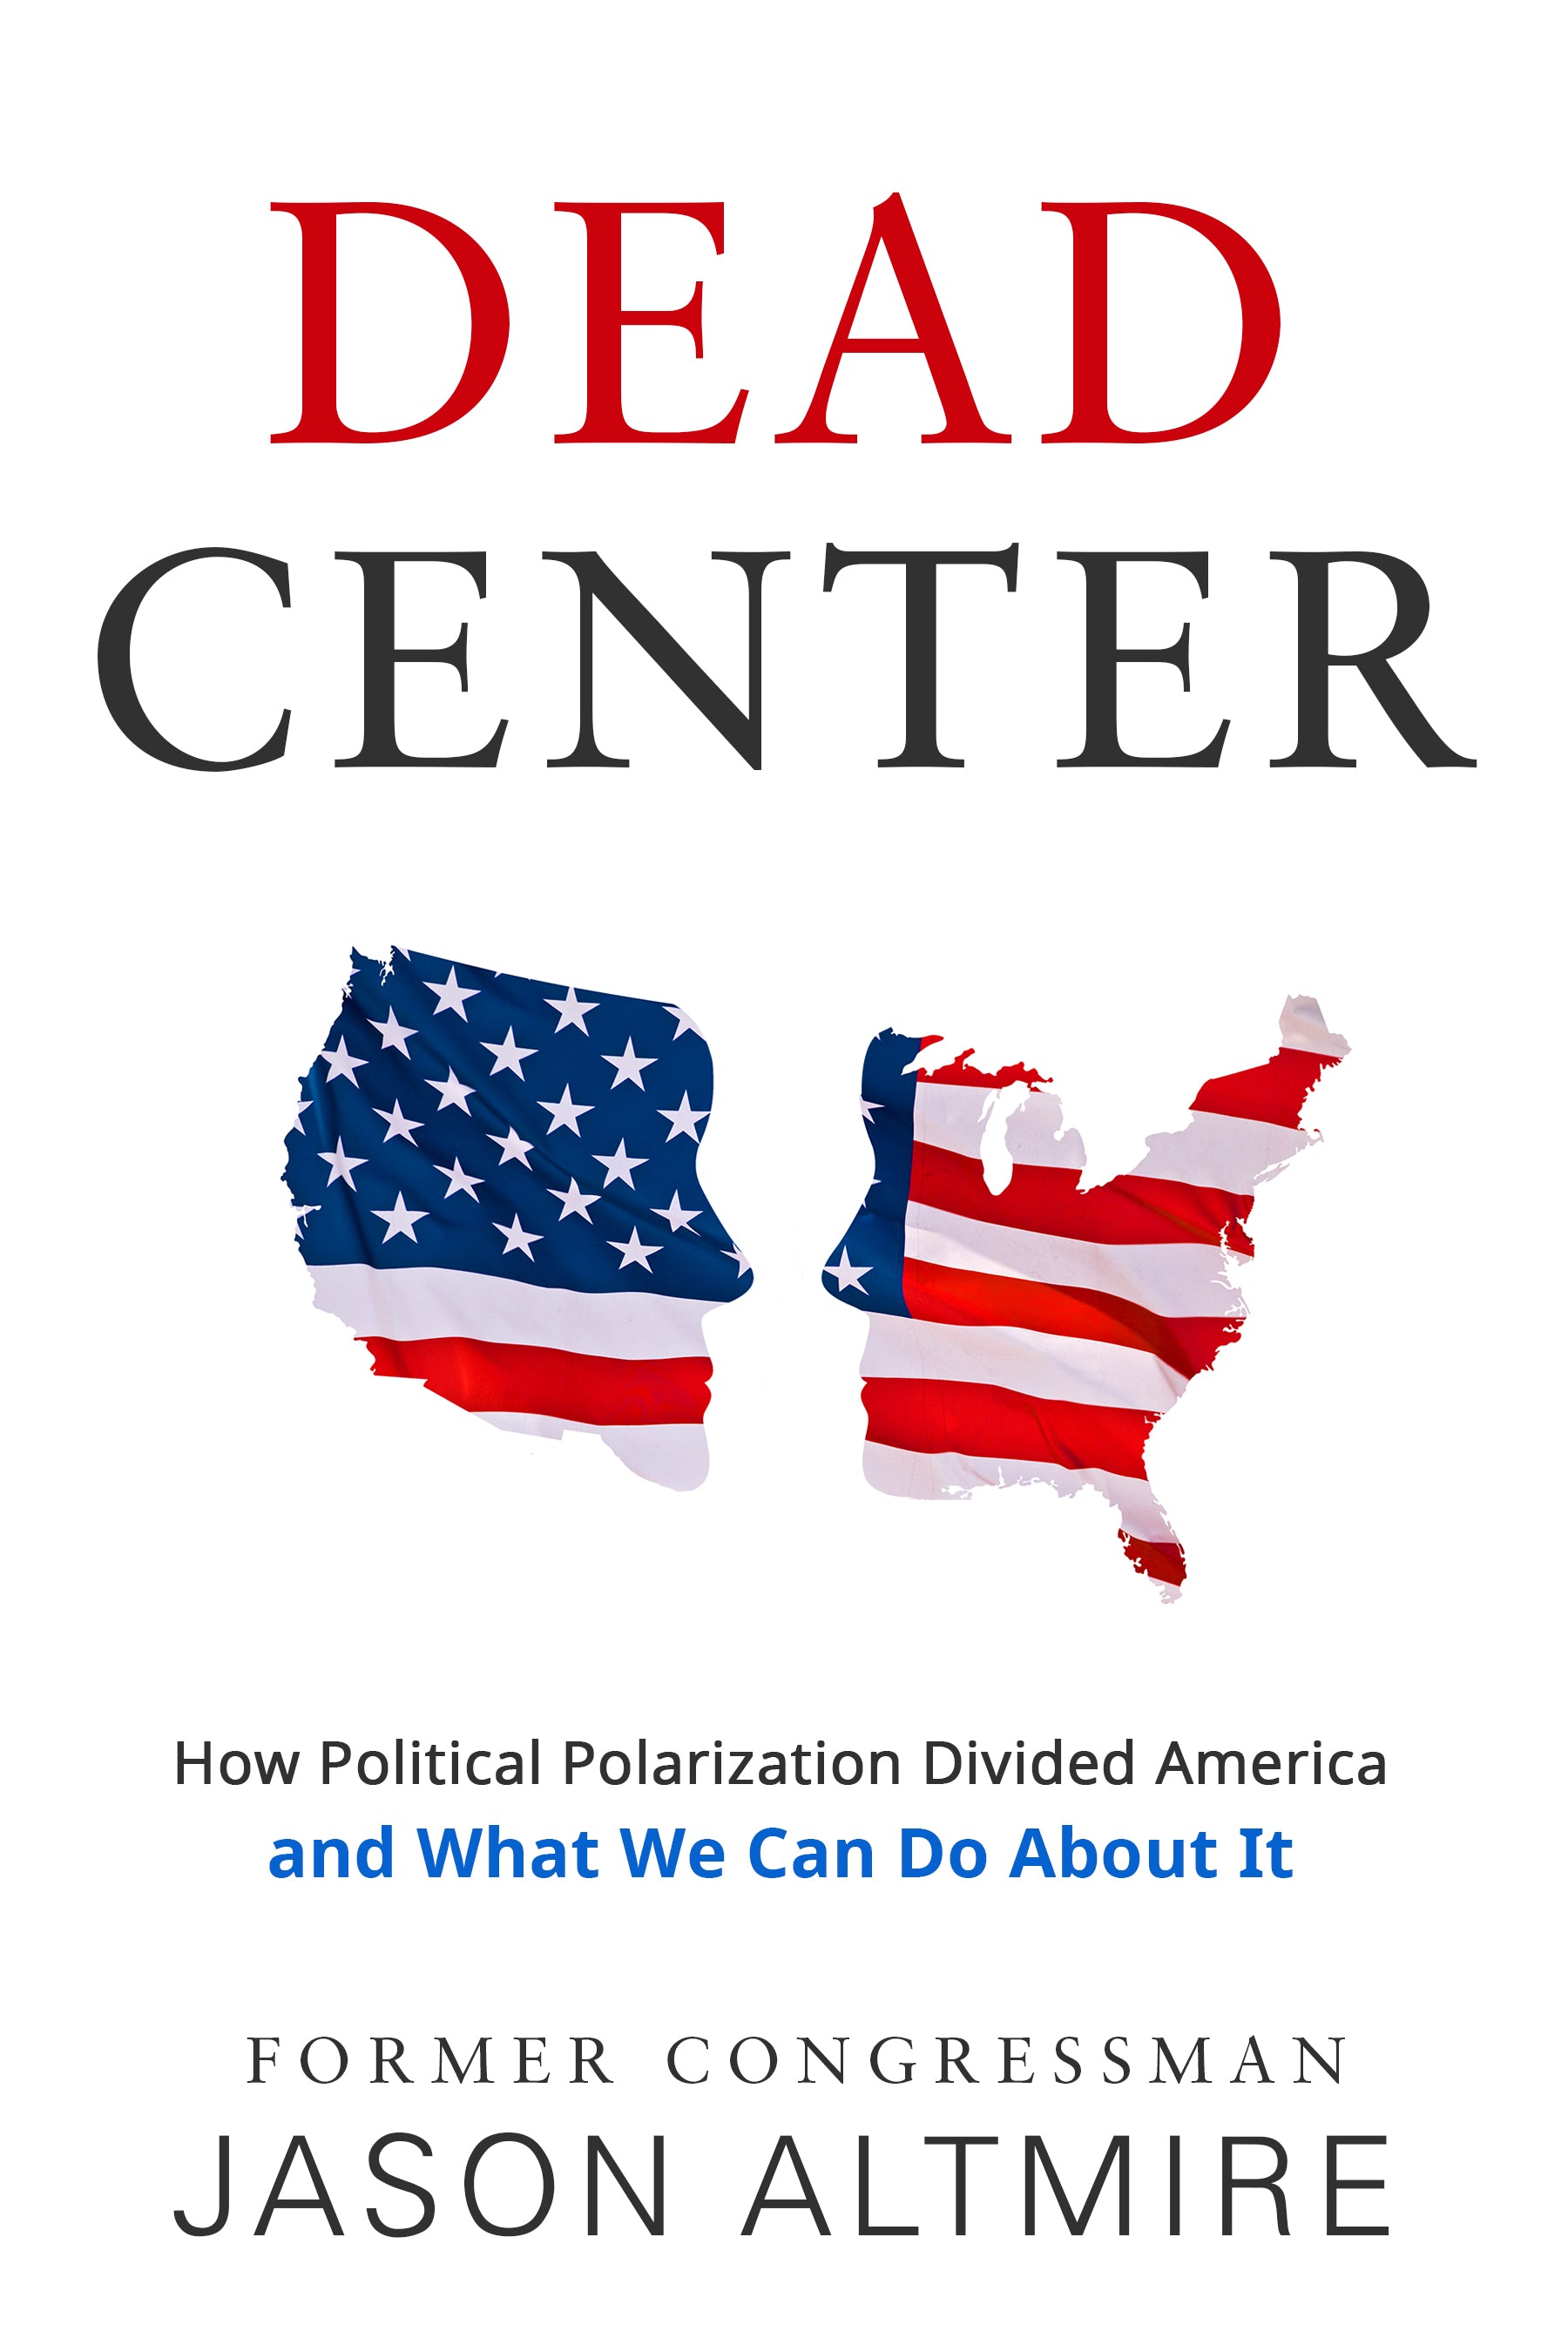 Jason Altmire’s “Dead Center” is the Sunbury Press bestseller for November